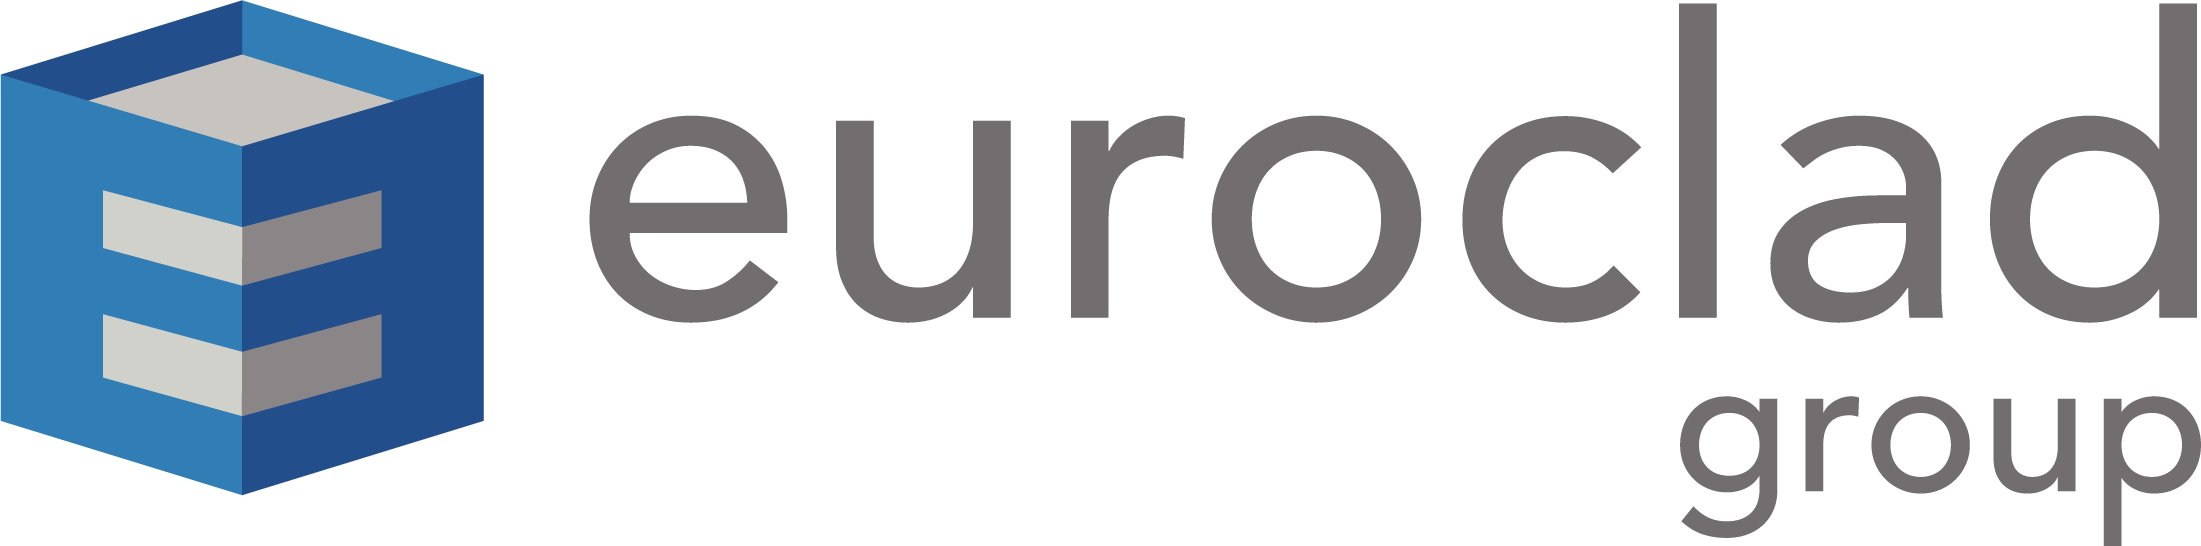 Euroclad group logo